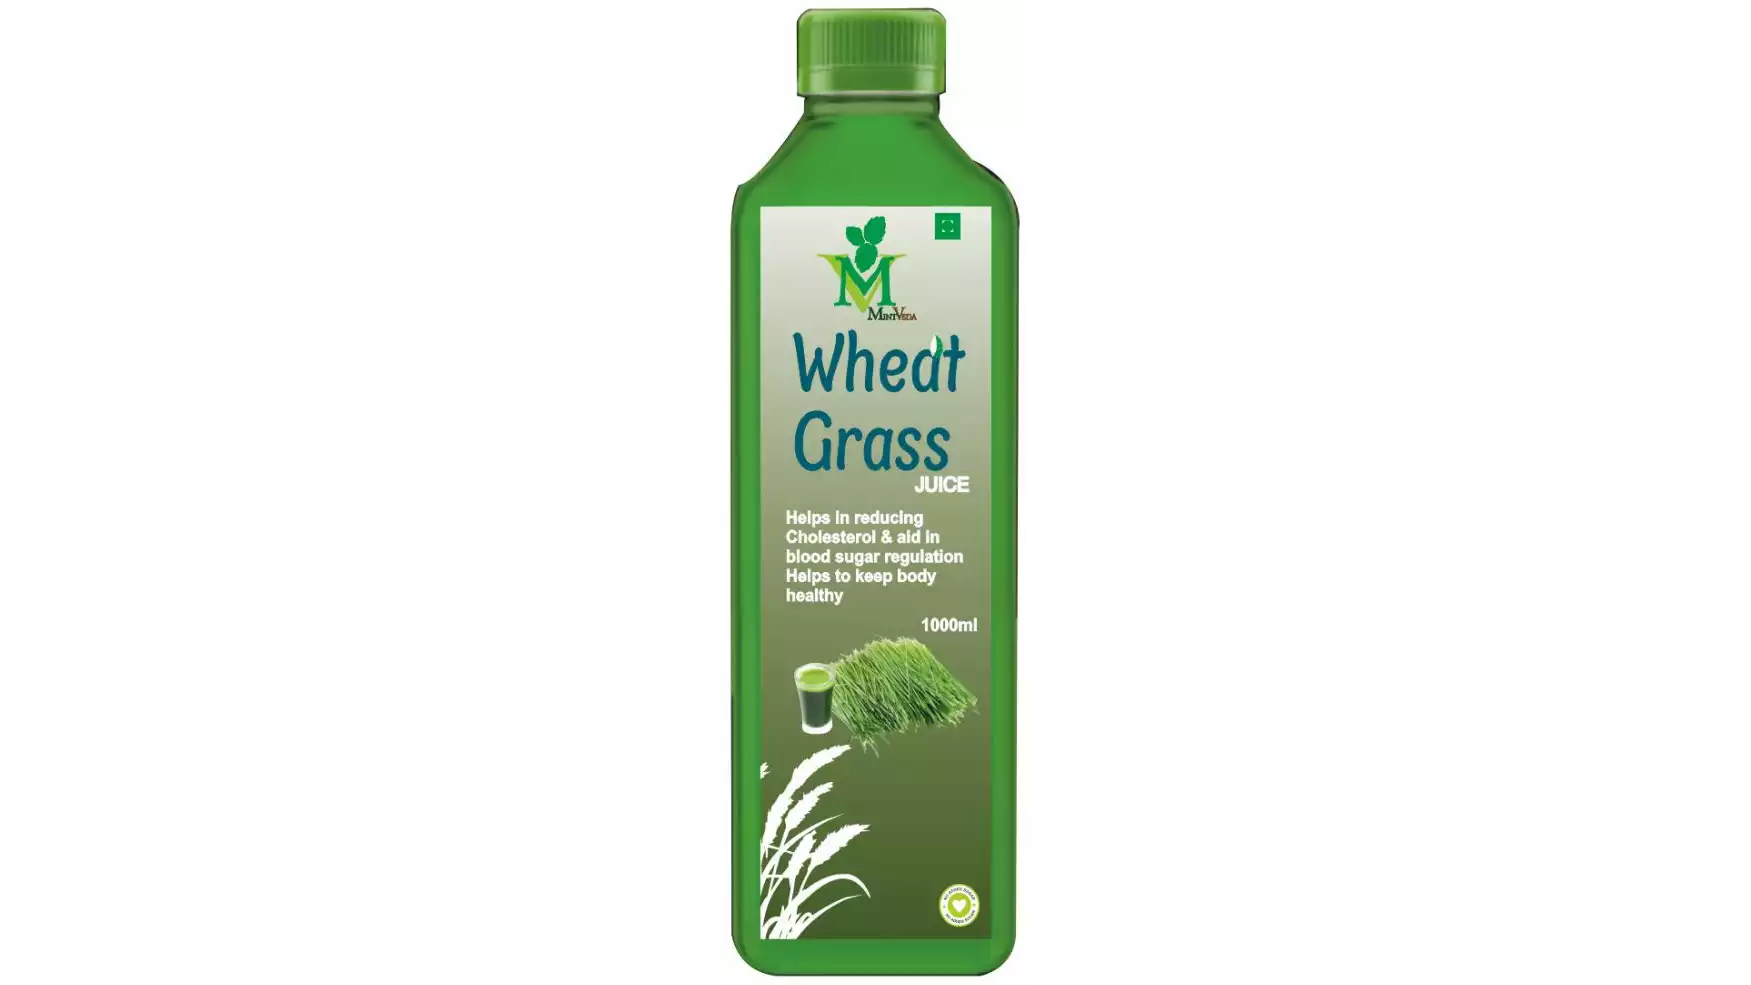 Mint Veda Wheat Grass (Sugar Free) Juice (1liter)